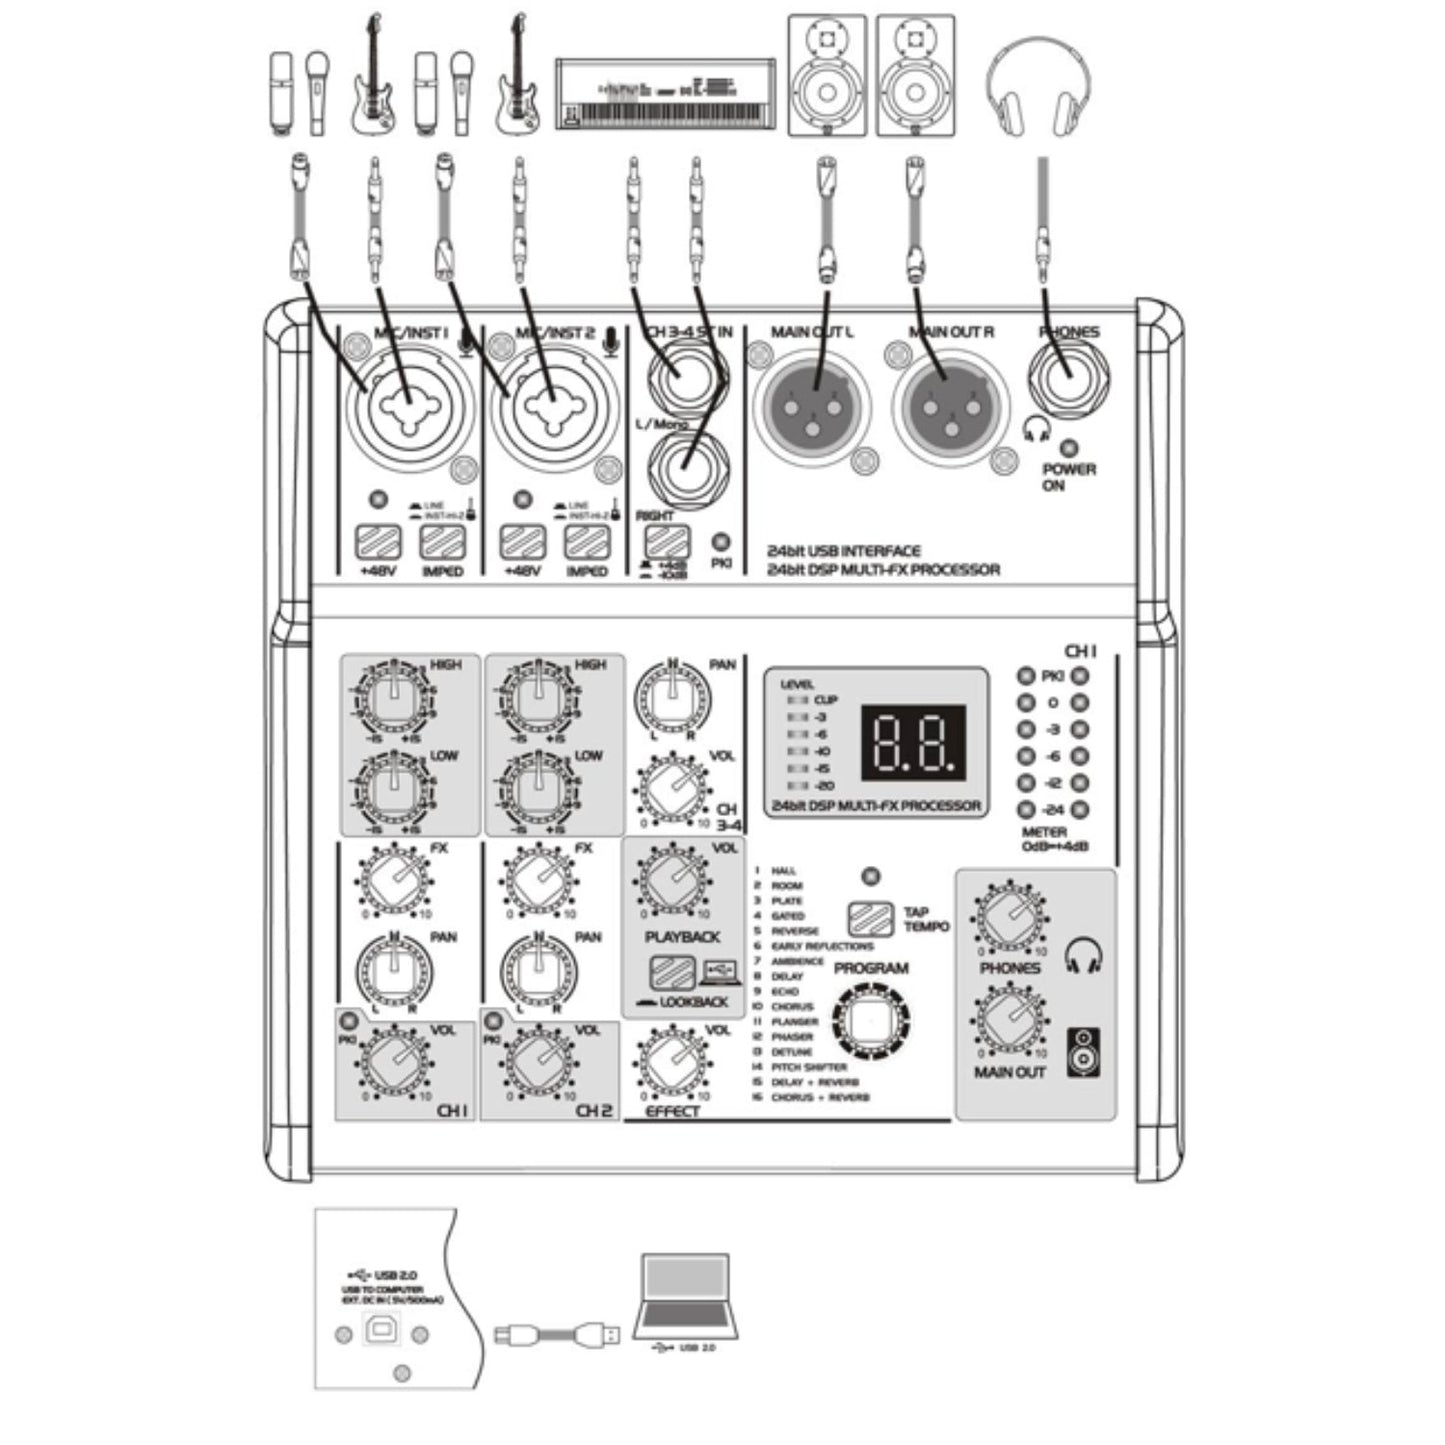 E-lektron AIM-68 U-PAD 6 Channel DSP Mixing Console streaming mixer USB Audio Interface Mic Input